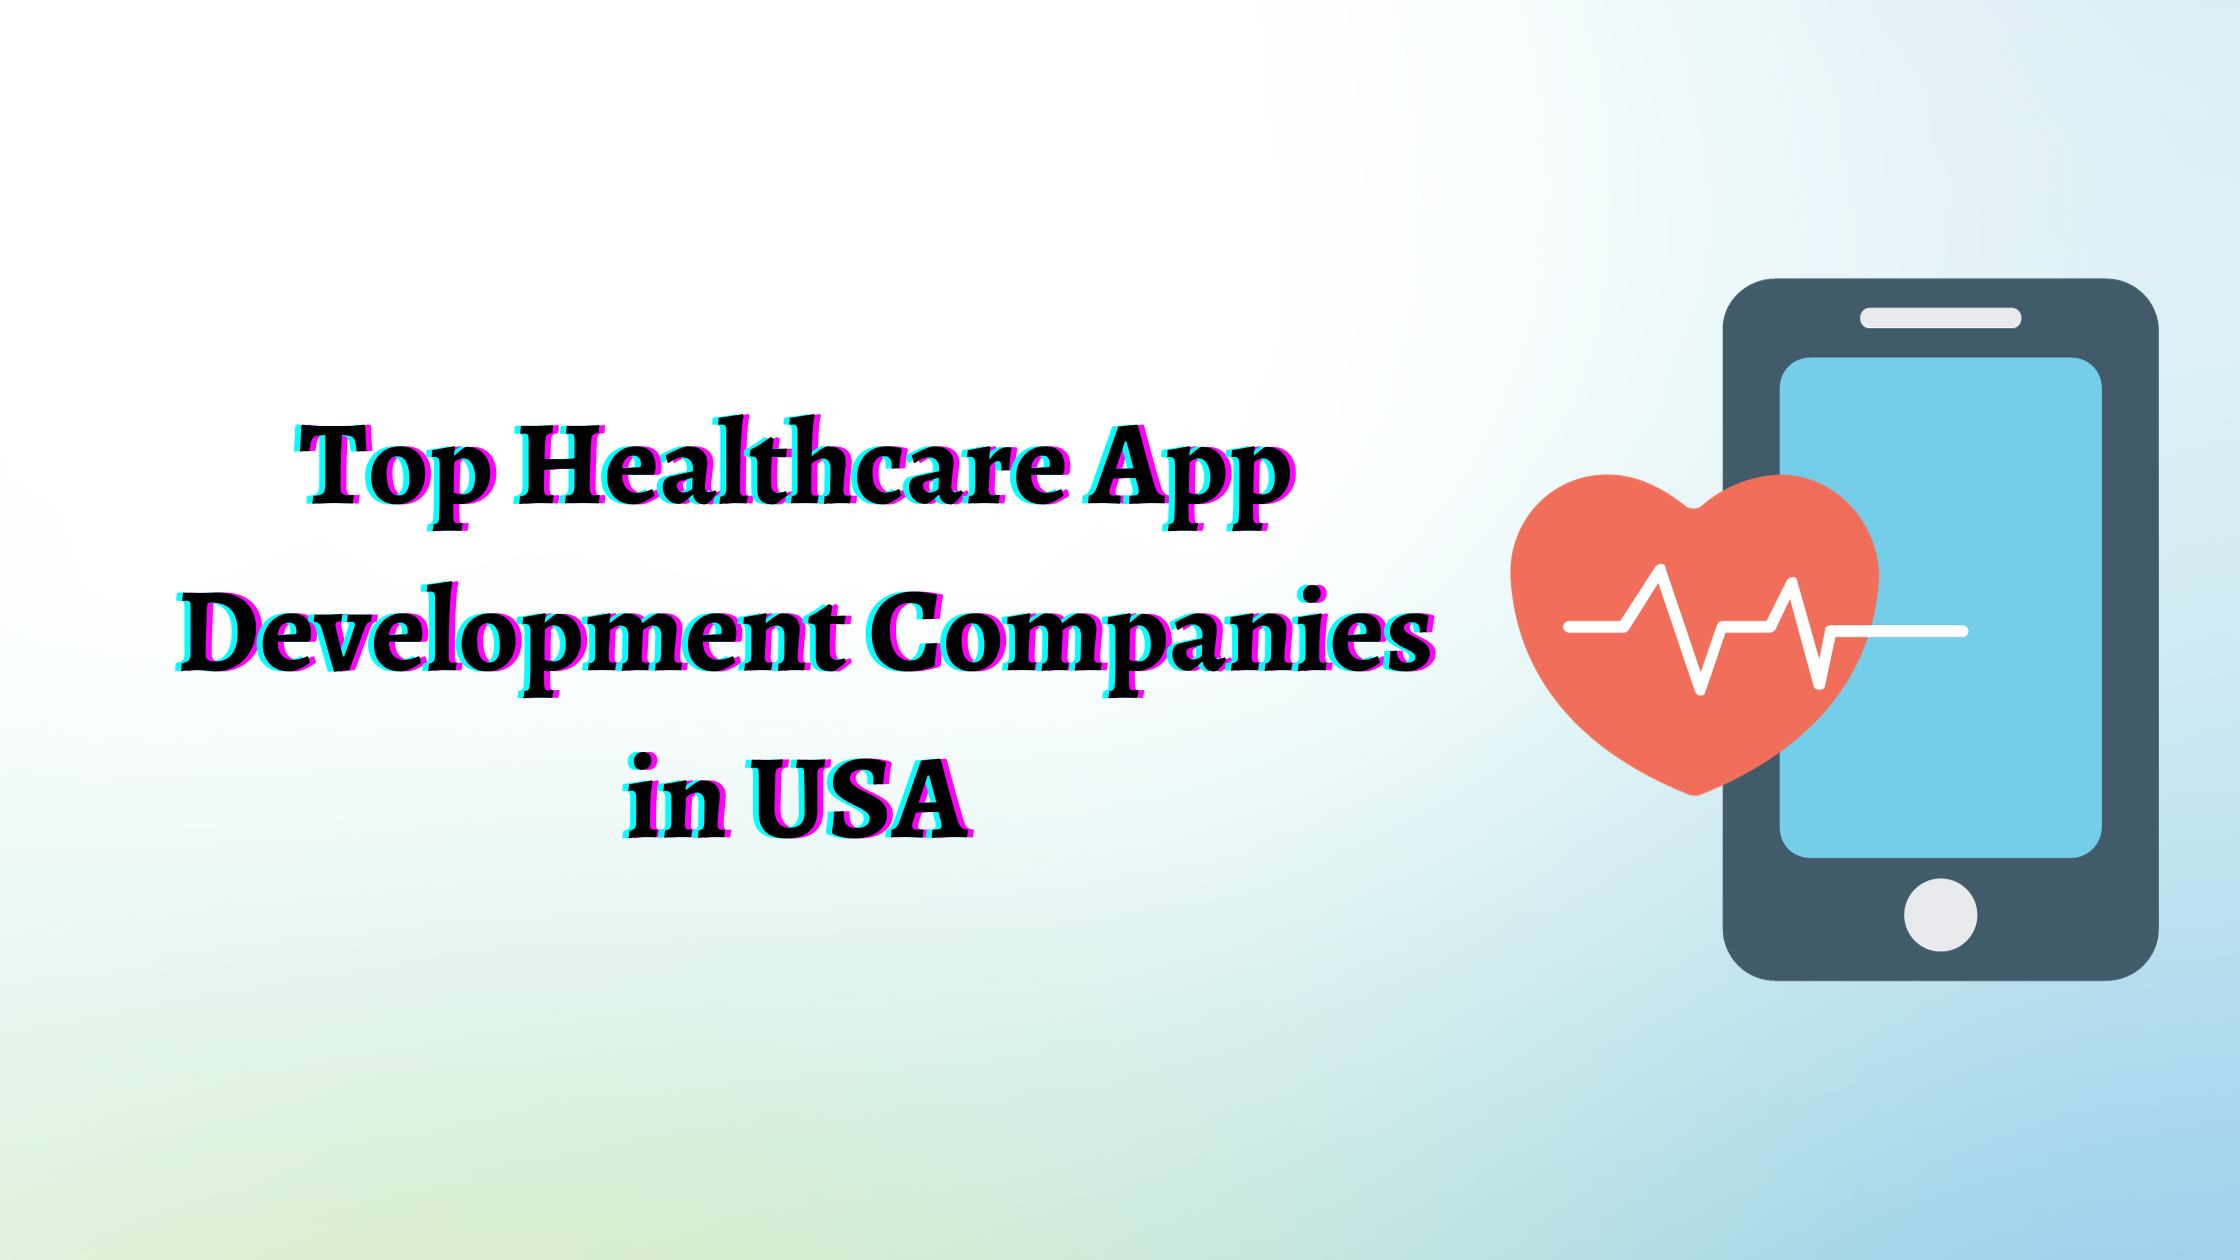 Top Healthcare App
Development Companies
in USA